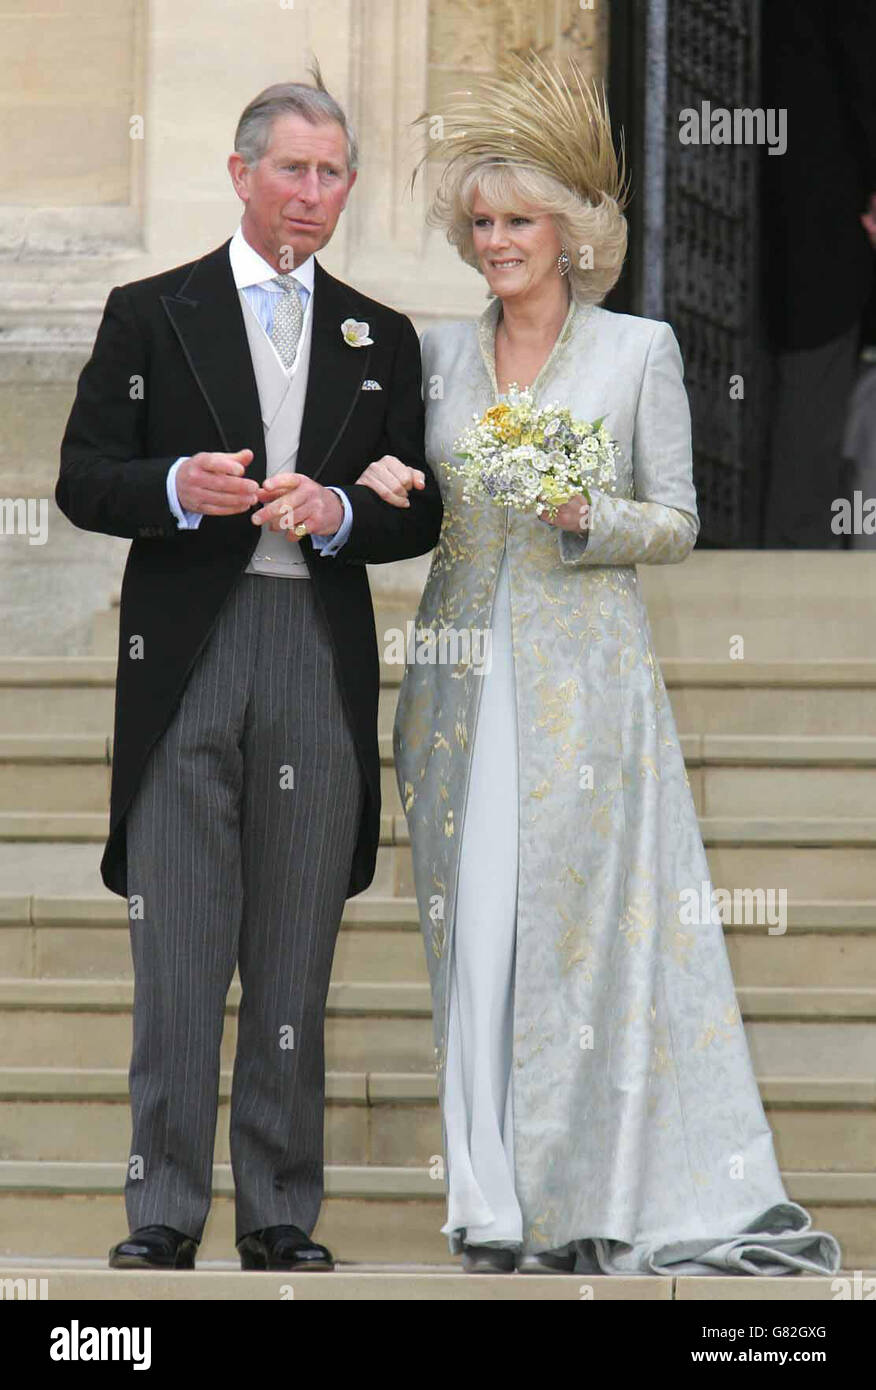 Prince Charles And Camilla Wedding Photos : Prince Charles Cried Over ...